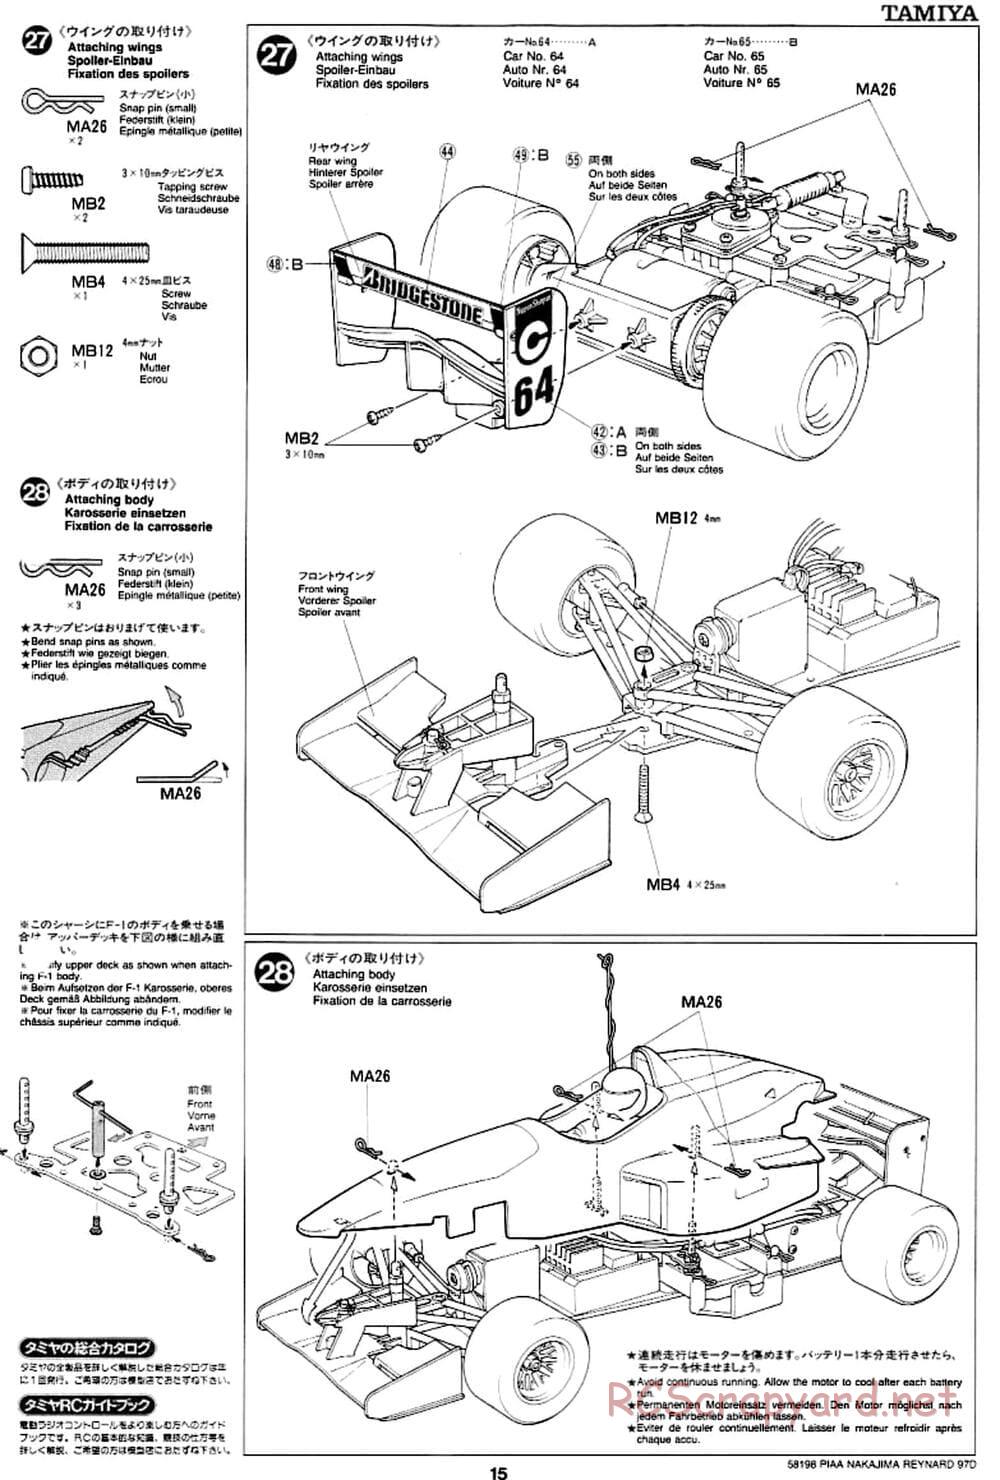 Tamiya - PIAA Nakajima Reynard 97D - F103 Chassis - Manual - Page 15